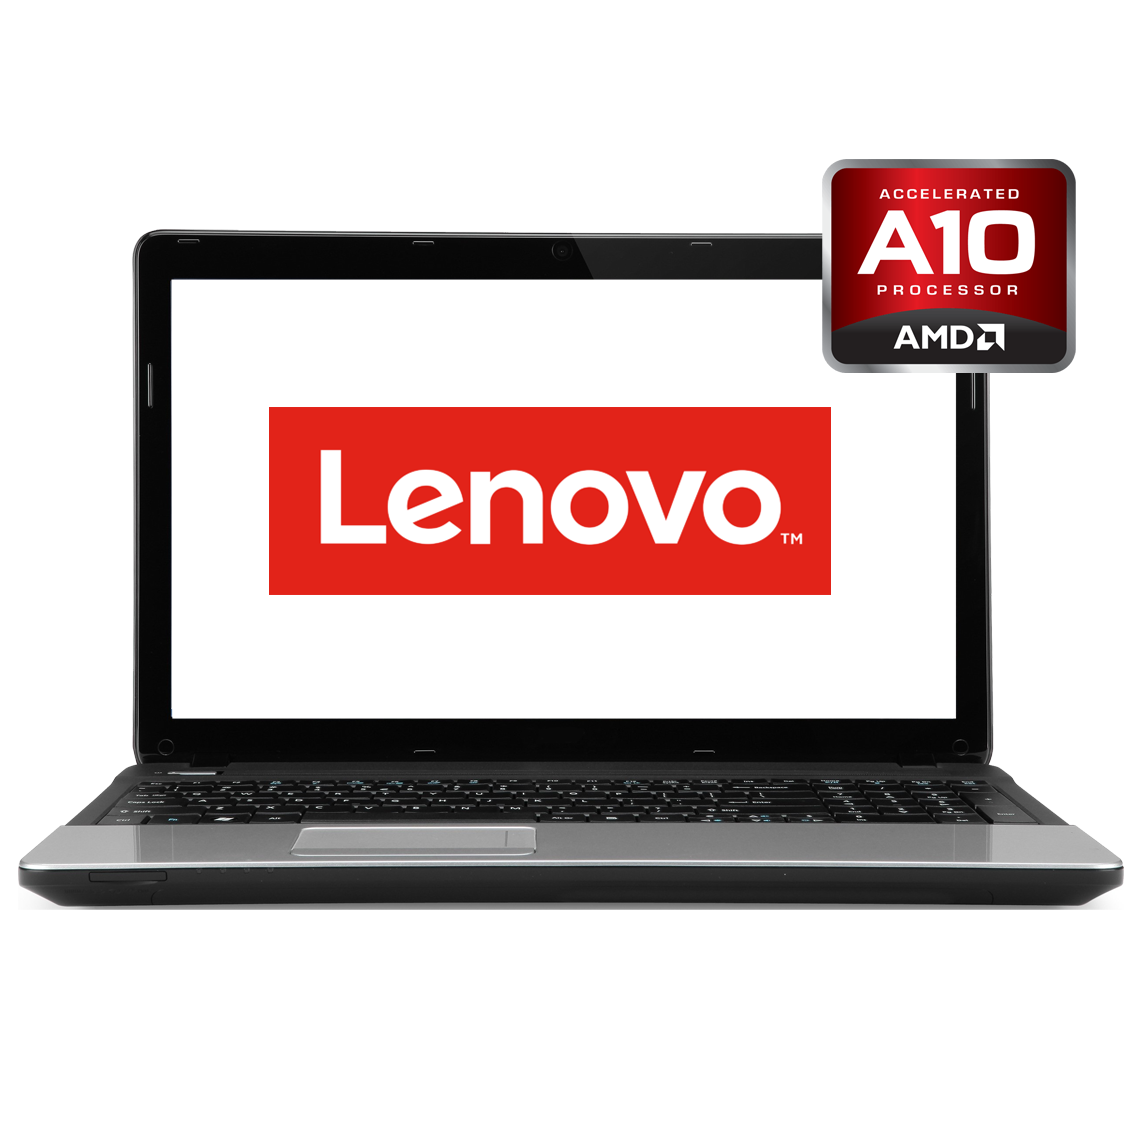 Lenovo - 13.3 inch AMD A10